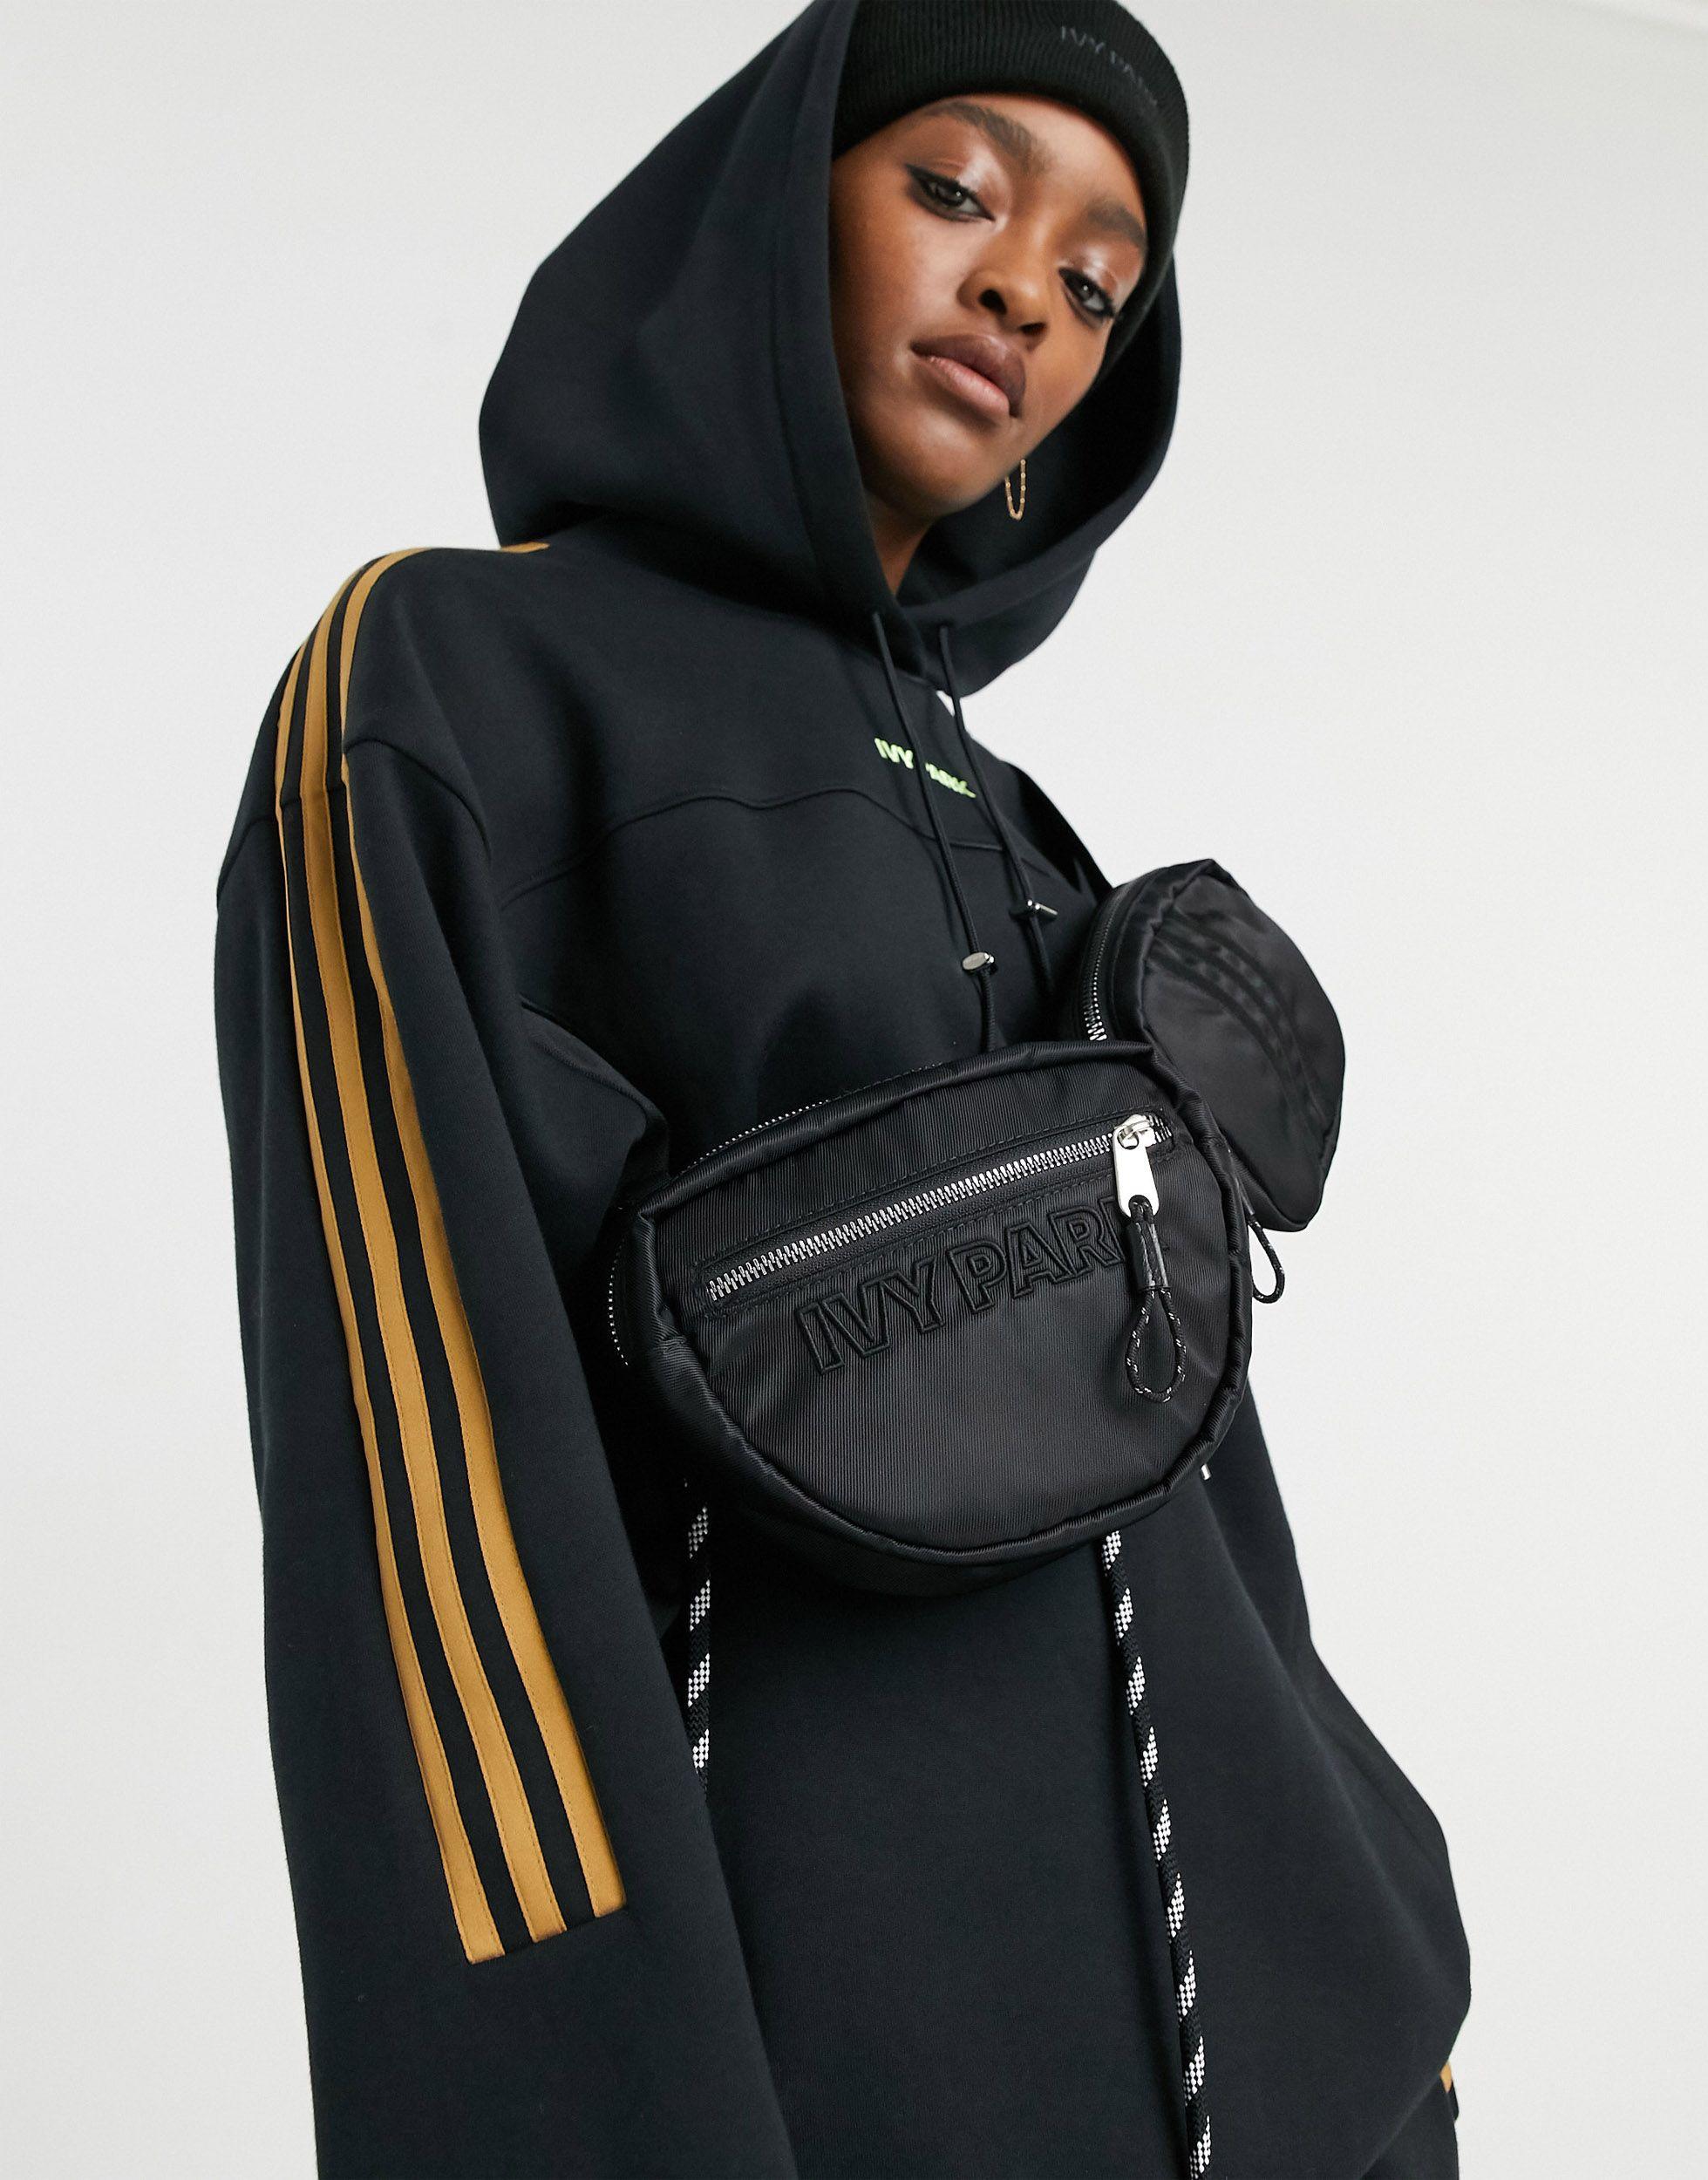 Ivy Park Synthetic Adidas X Belt Bum Bag in Black - Lyst